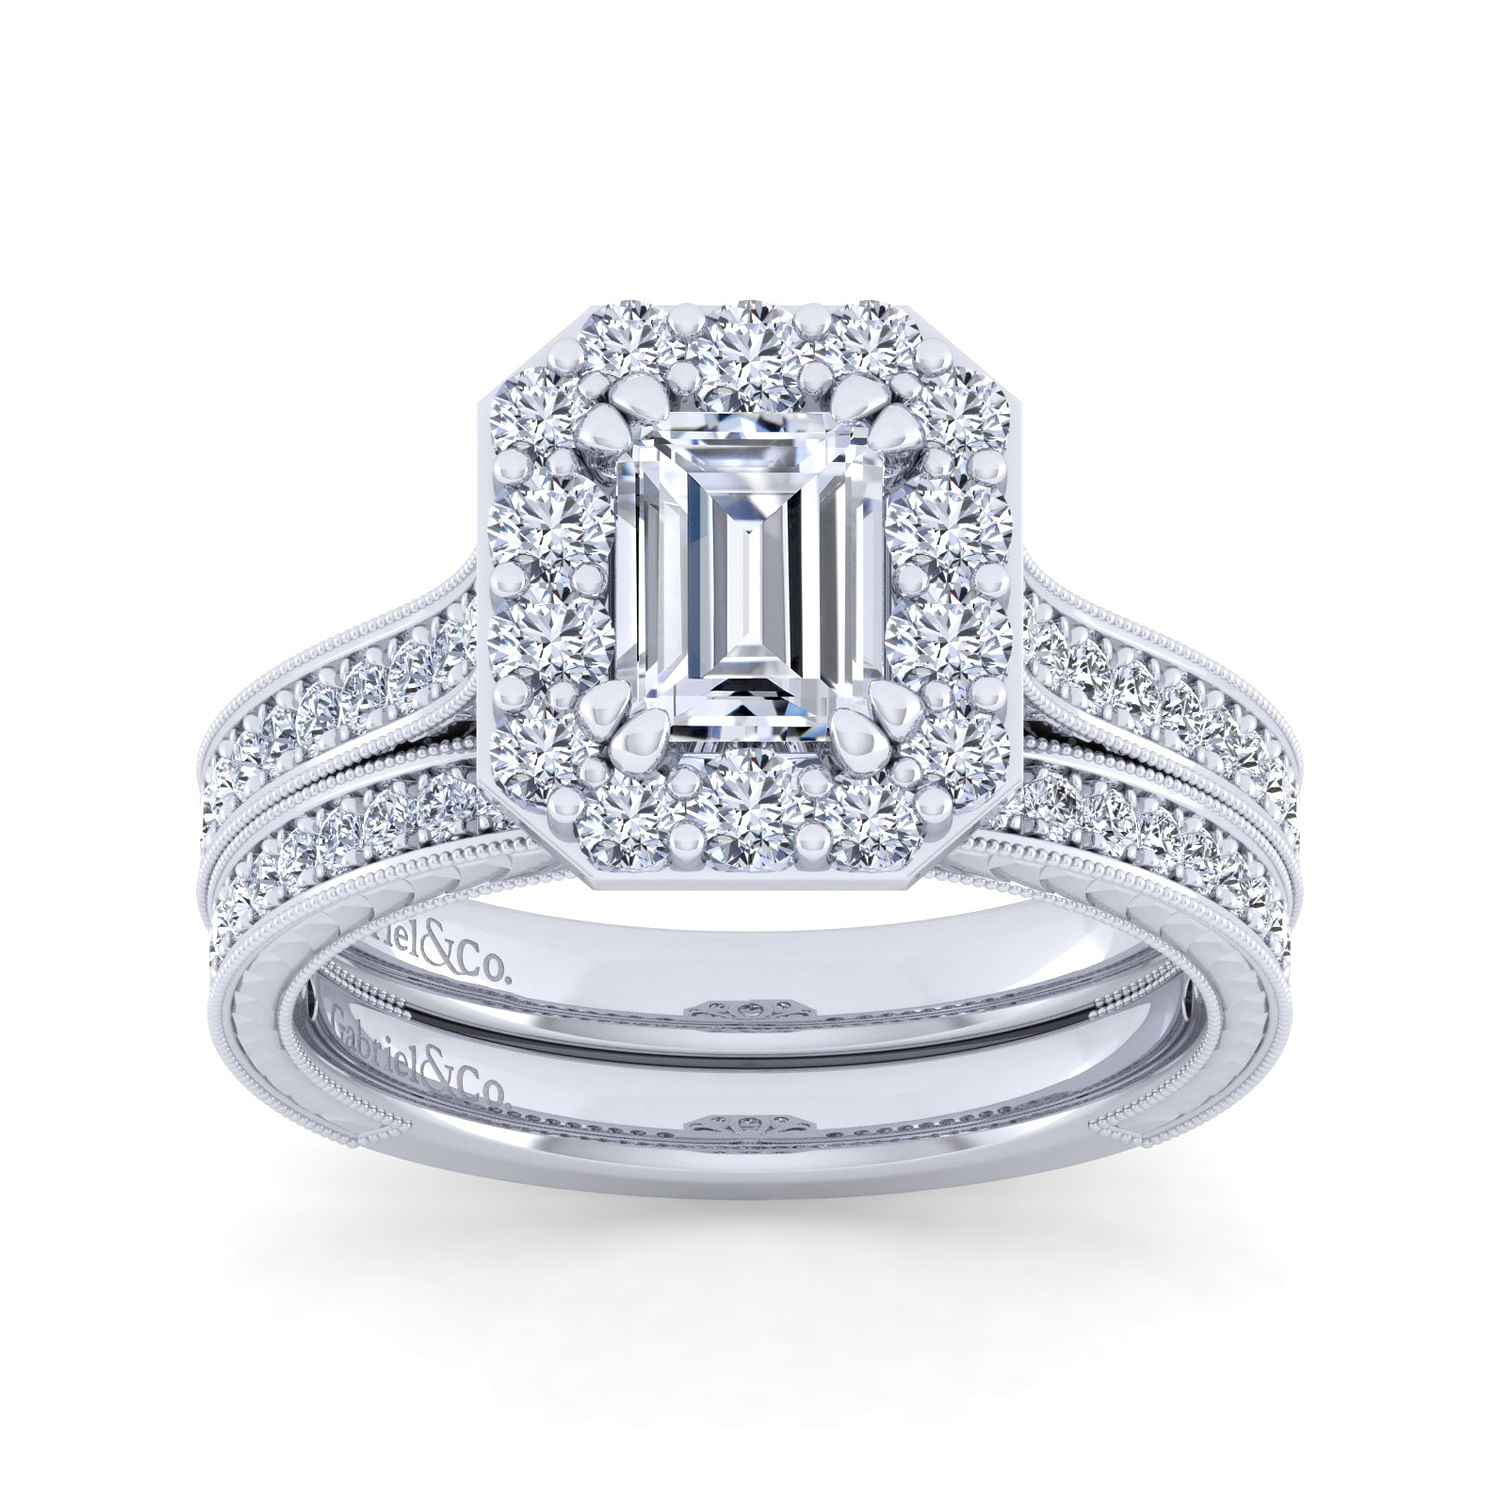 Vintage Inspired 14K White Gold Emerald Halo Diamond Engagement Ring